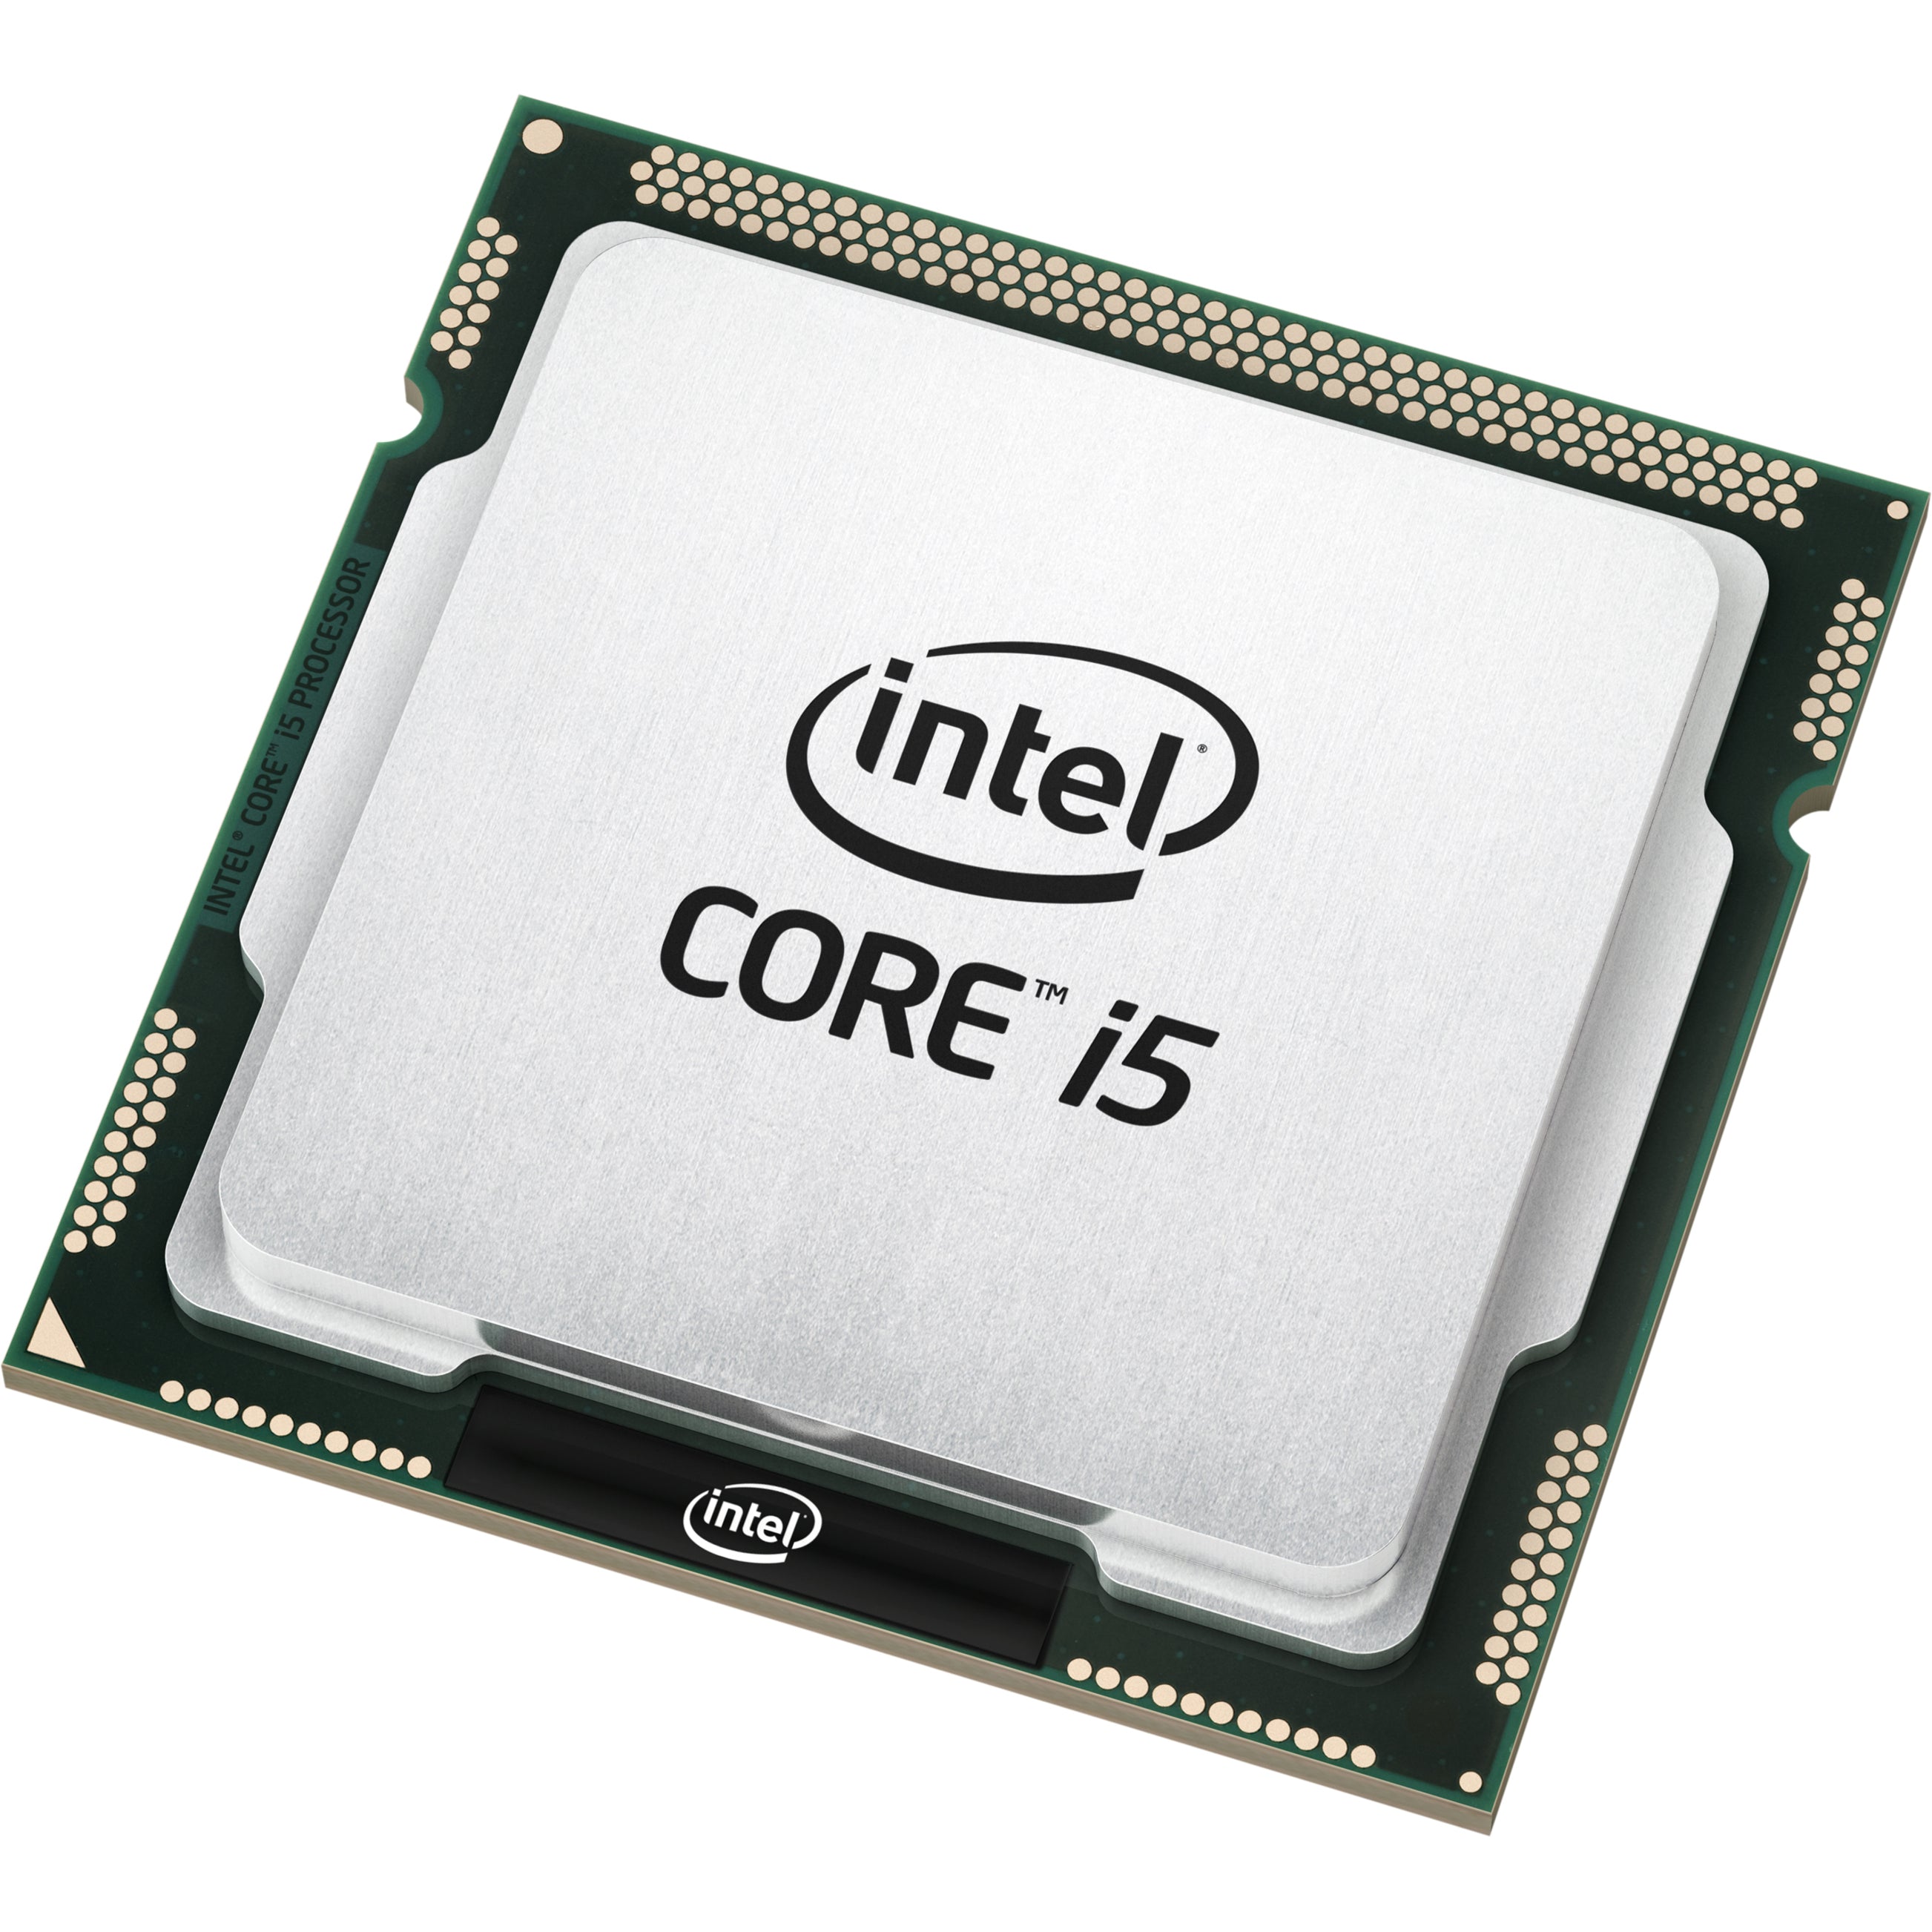 Intel BX80646I54570S Core i5-4570S Quad-core i5-4570S 2.9GHz Desktop Processor, 6MB Cache, 65W Thermal Design Power